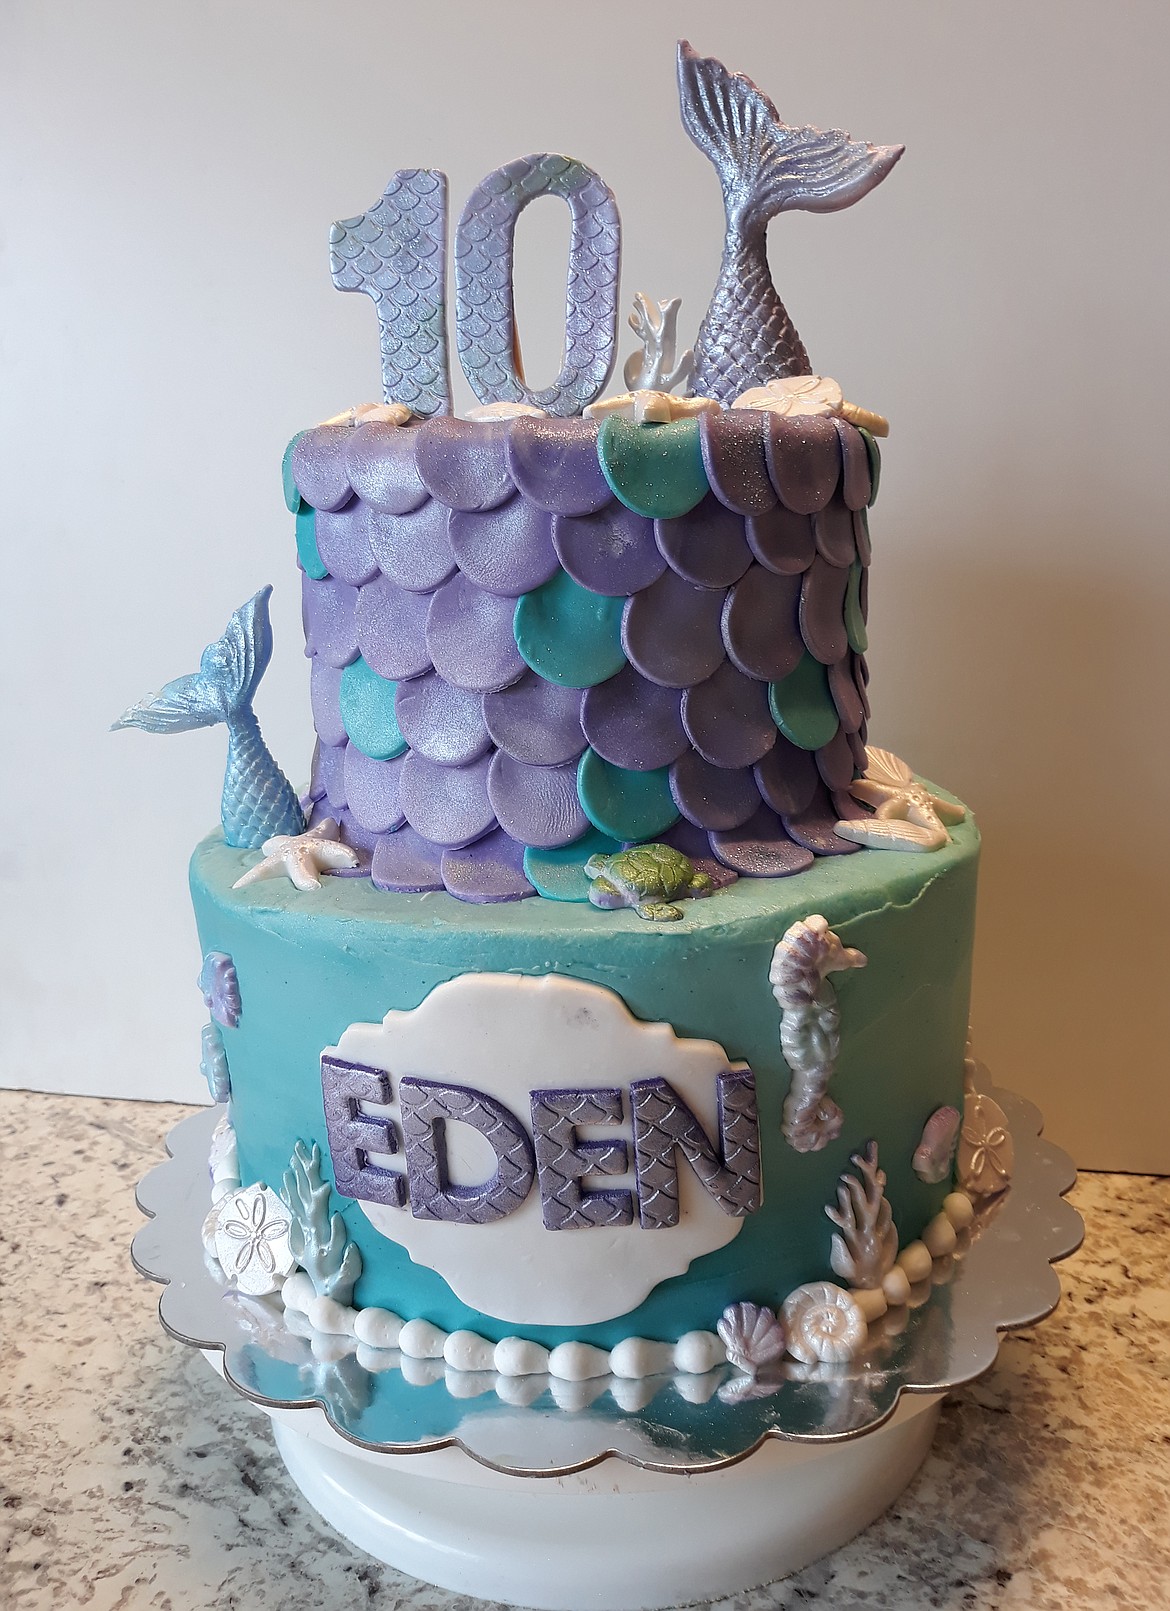 A mermaid cake by Debi Hanscom.